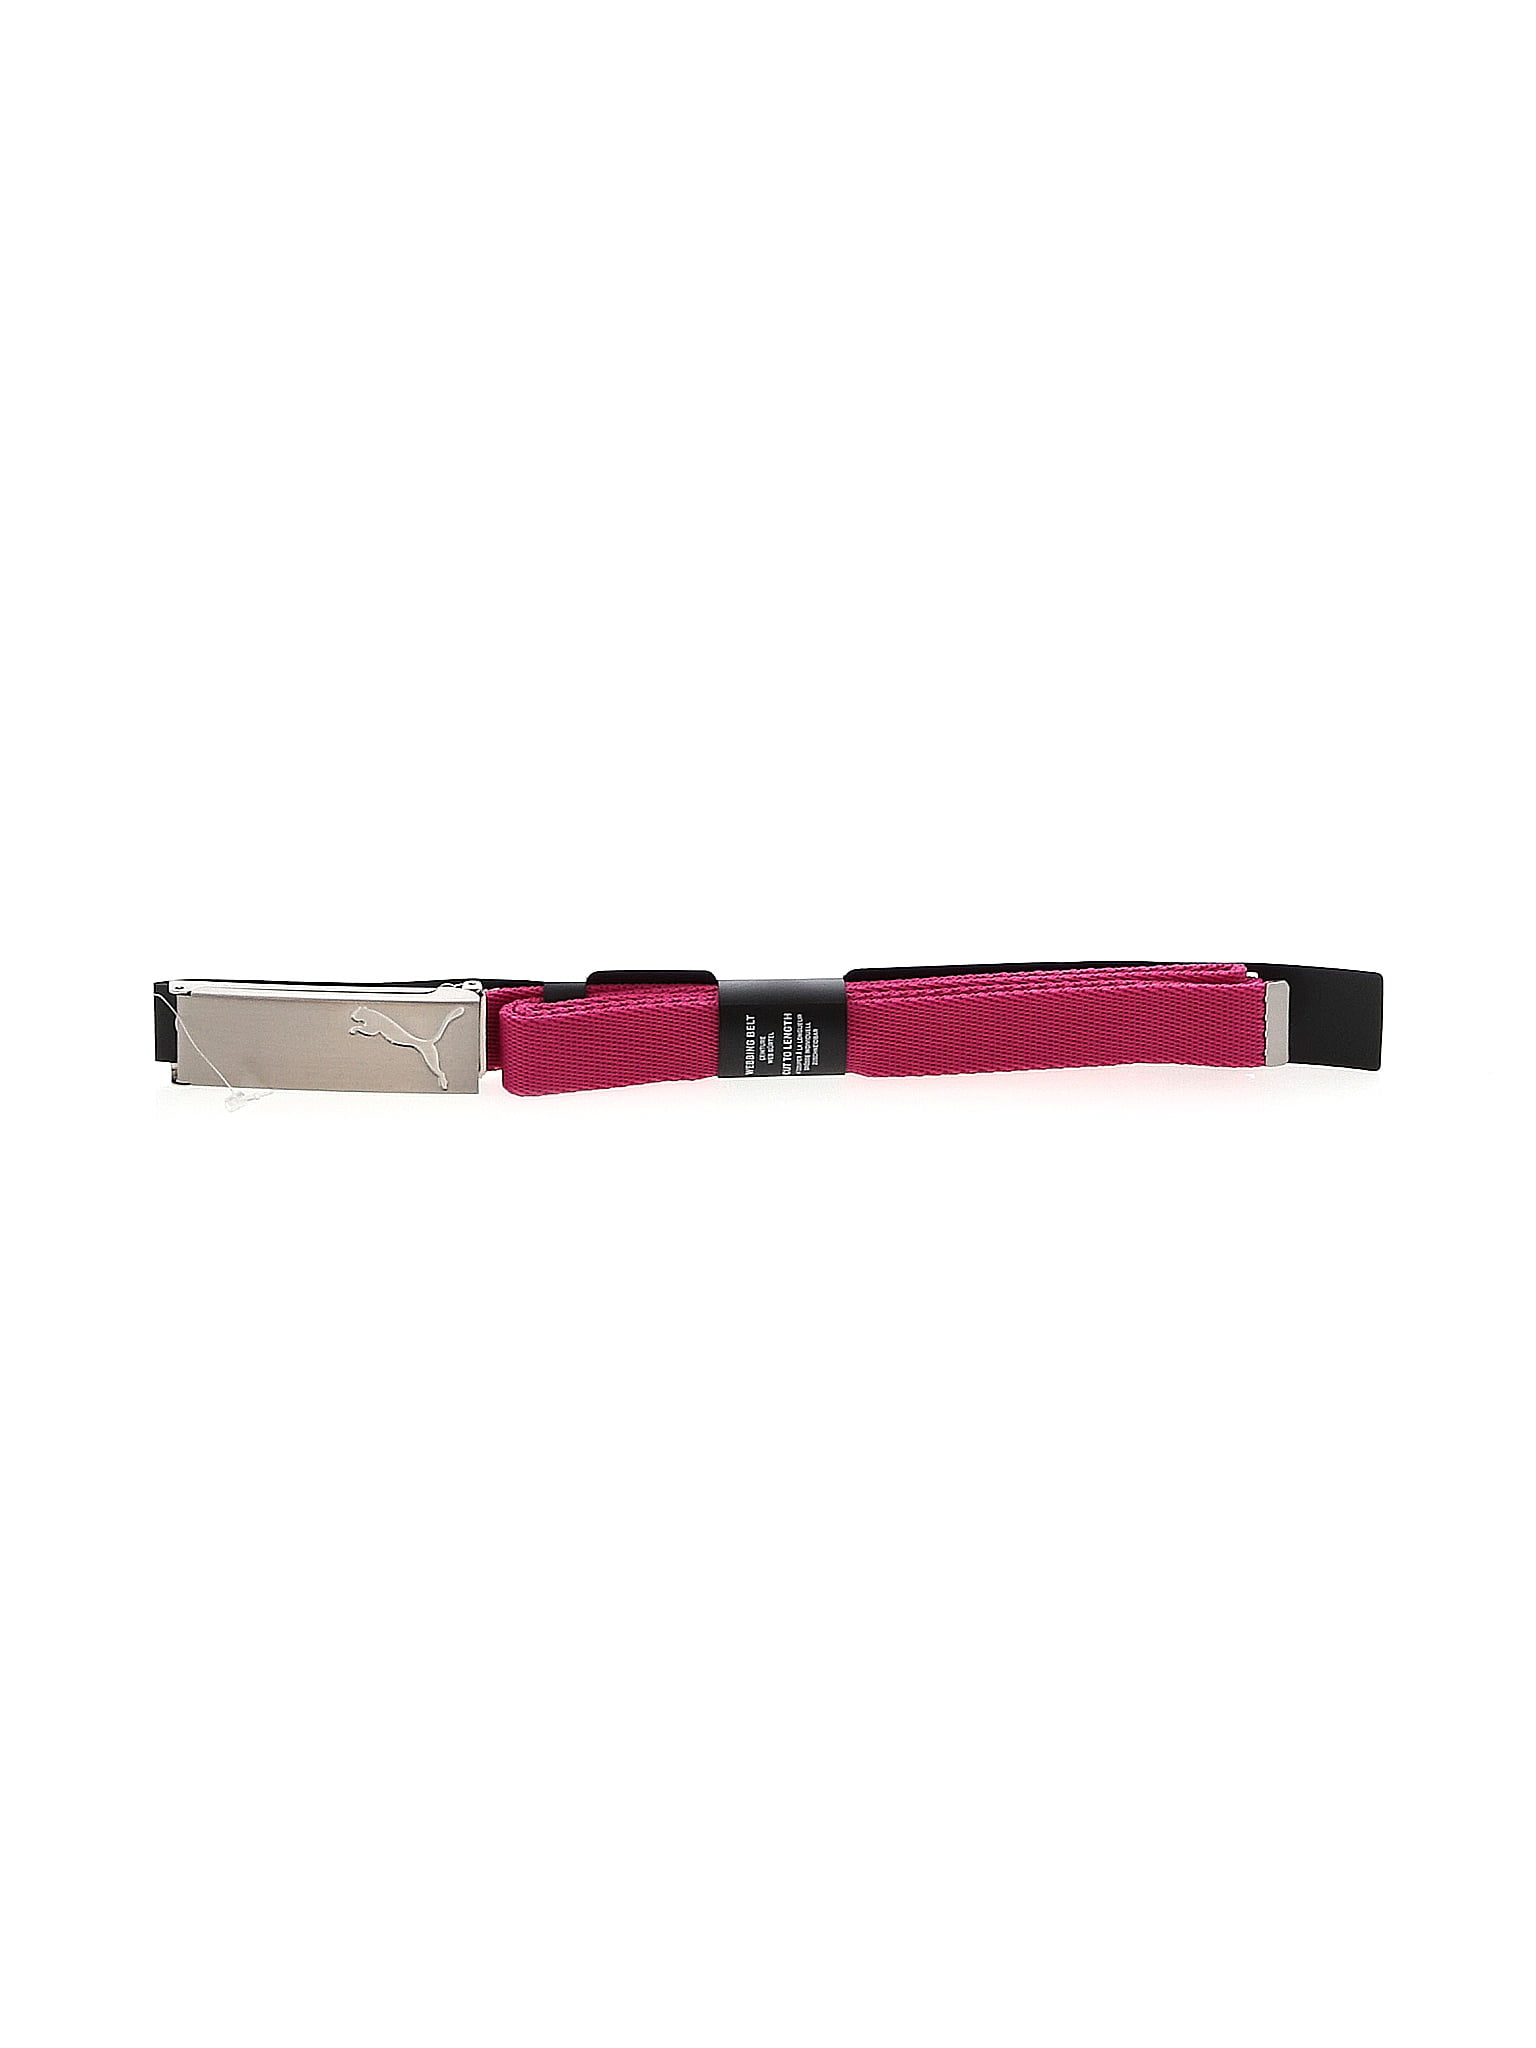 discount 94% WOMEN FASHION Accessories Belt Pink Pink Soda belt Pink Single 